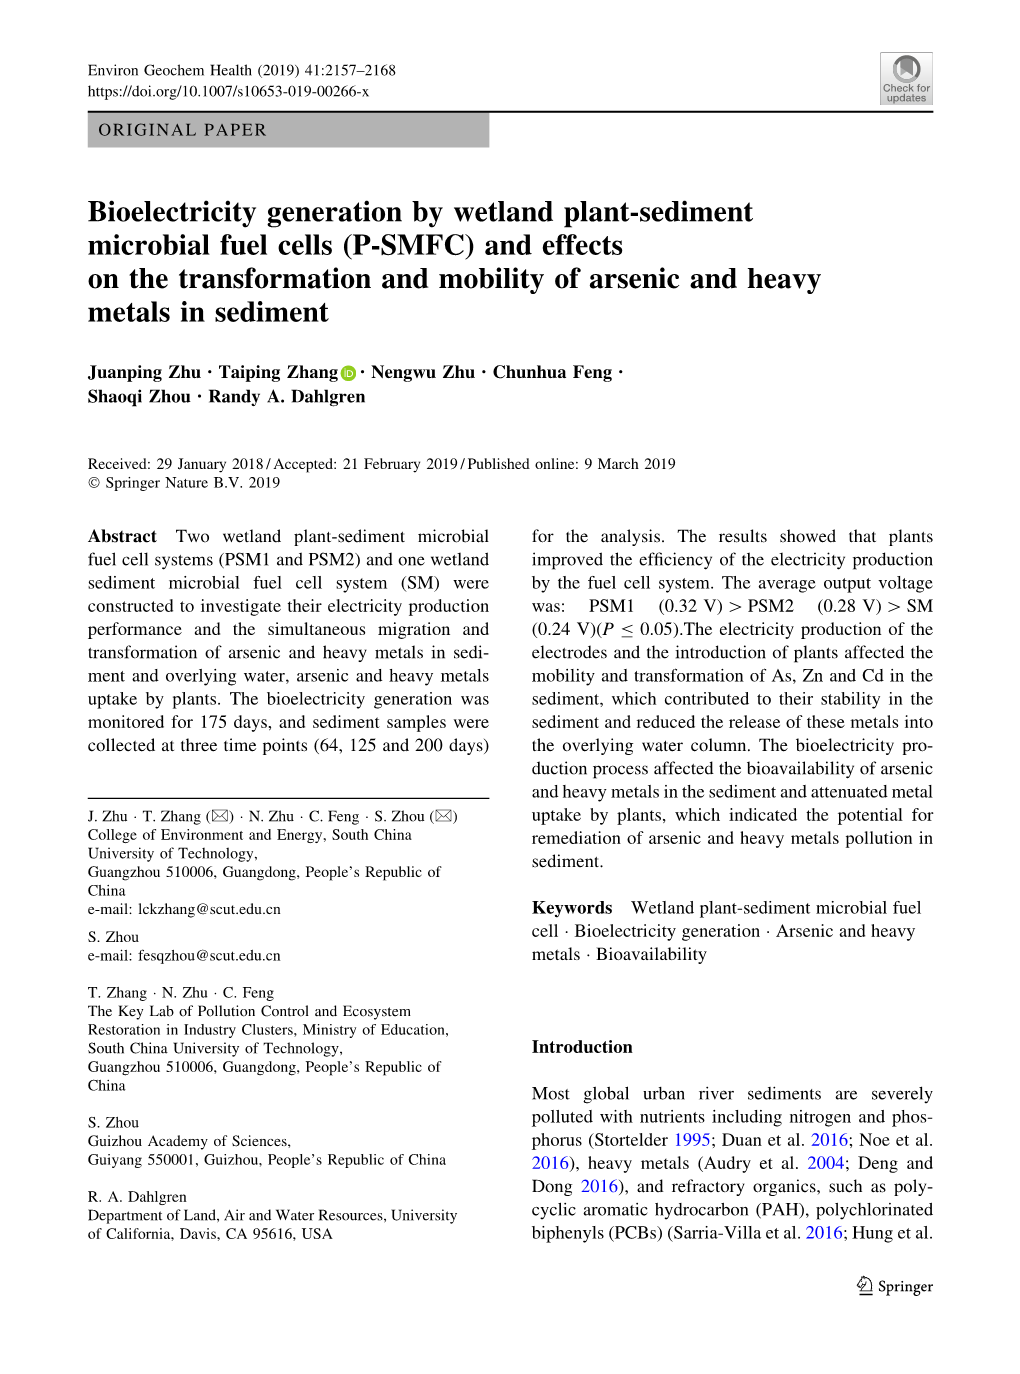 Bioelectricity Generation by Wetland Plant-Sediment